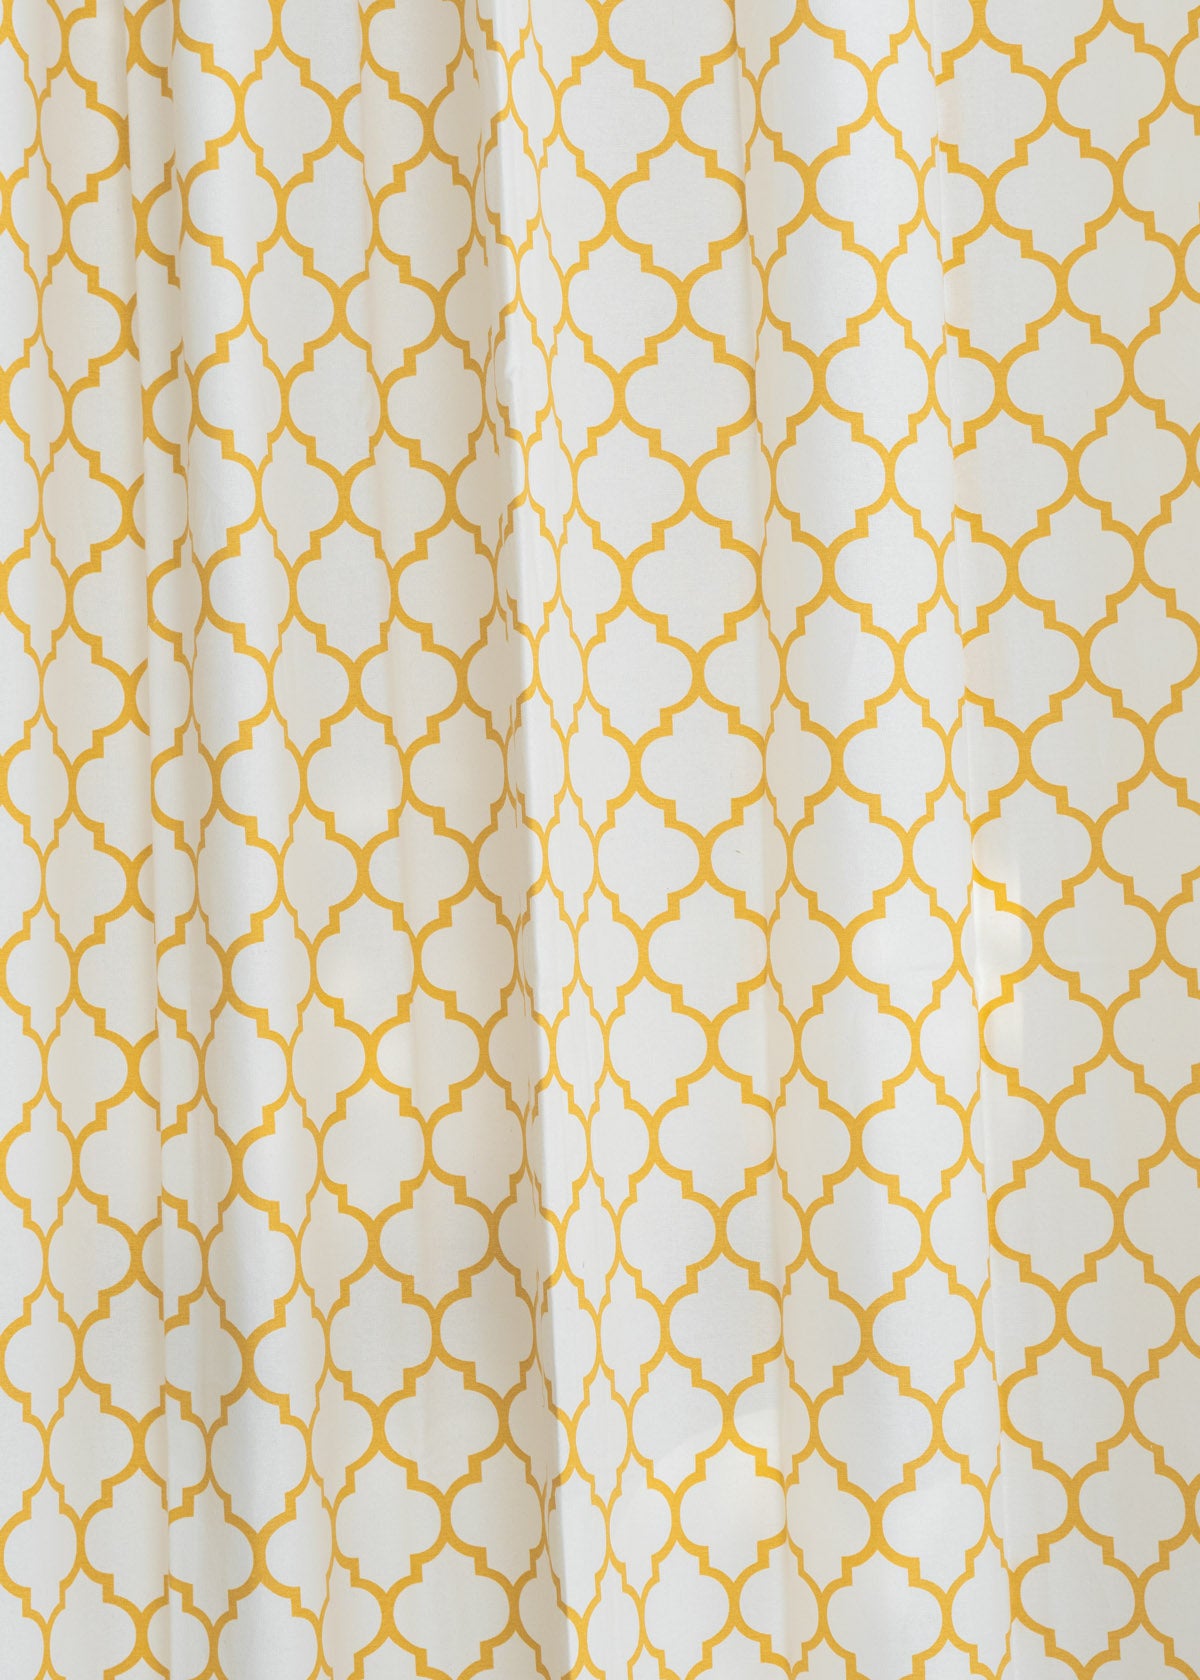 Trellis printed cotton Fabric - Mustard